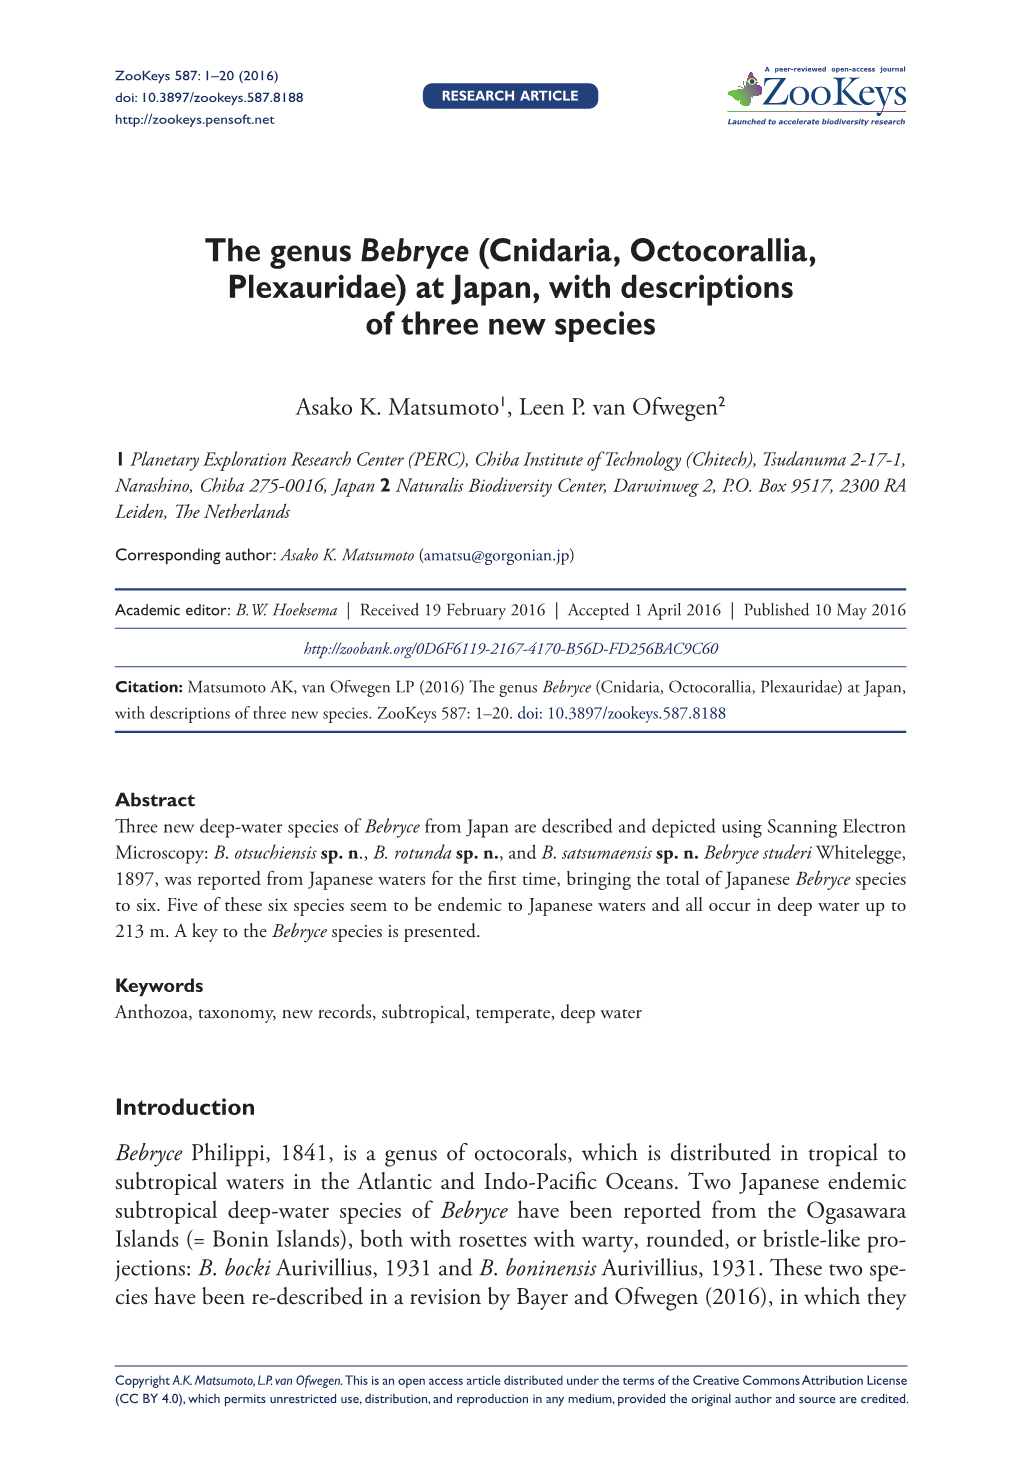 ﻿The Genus Bebryce (Cnidaria, Octocorallia, Plexauridae) at Japan, with Descriptions of Three New Species